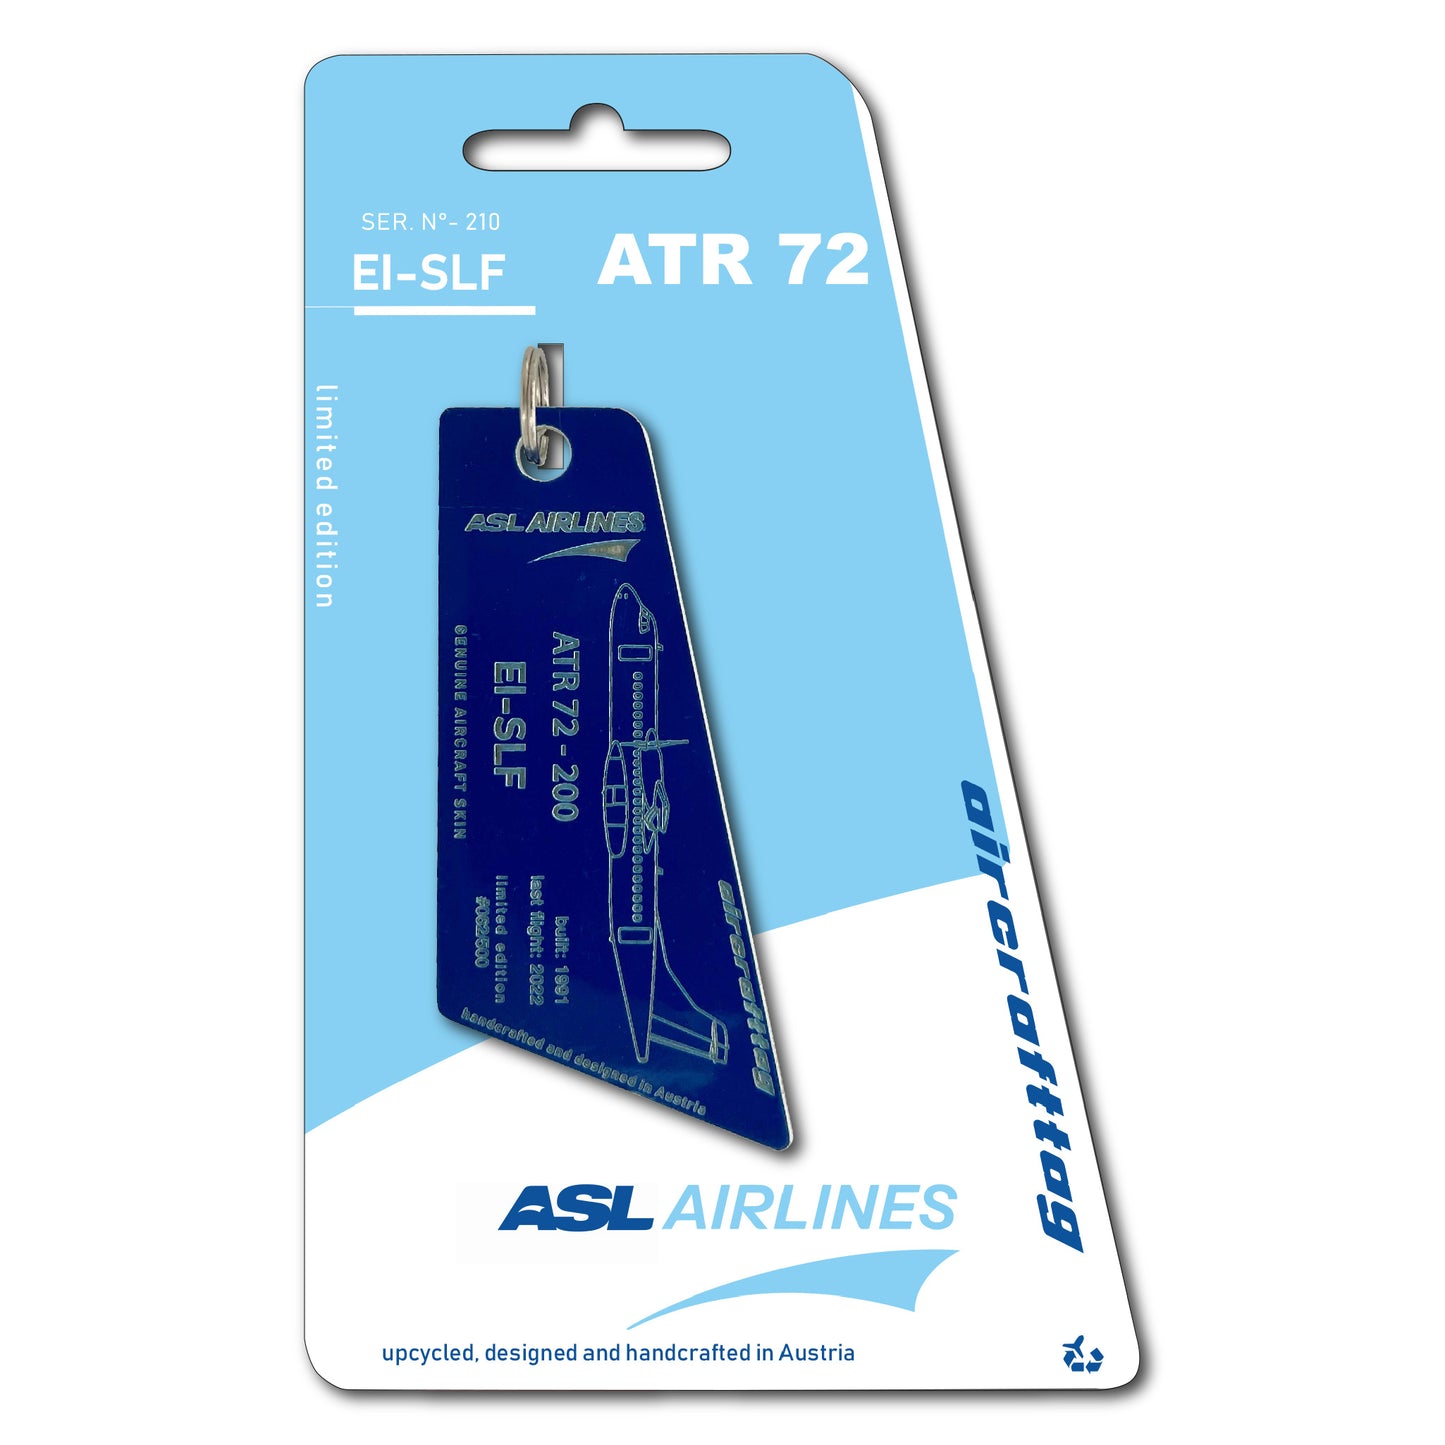 ATR 72 - ASL Airlines - EI-SLF